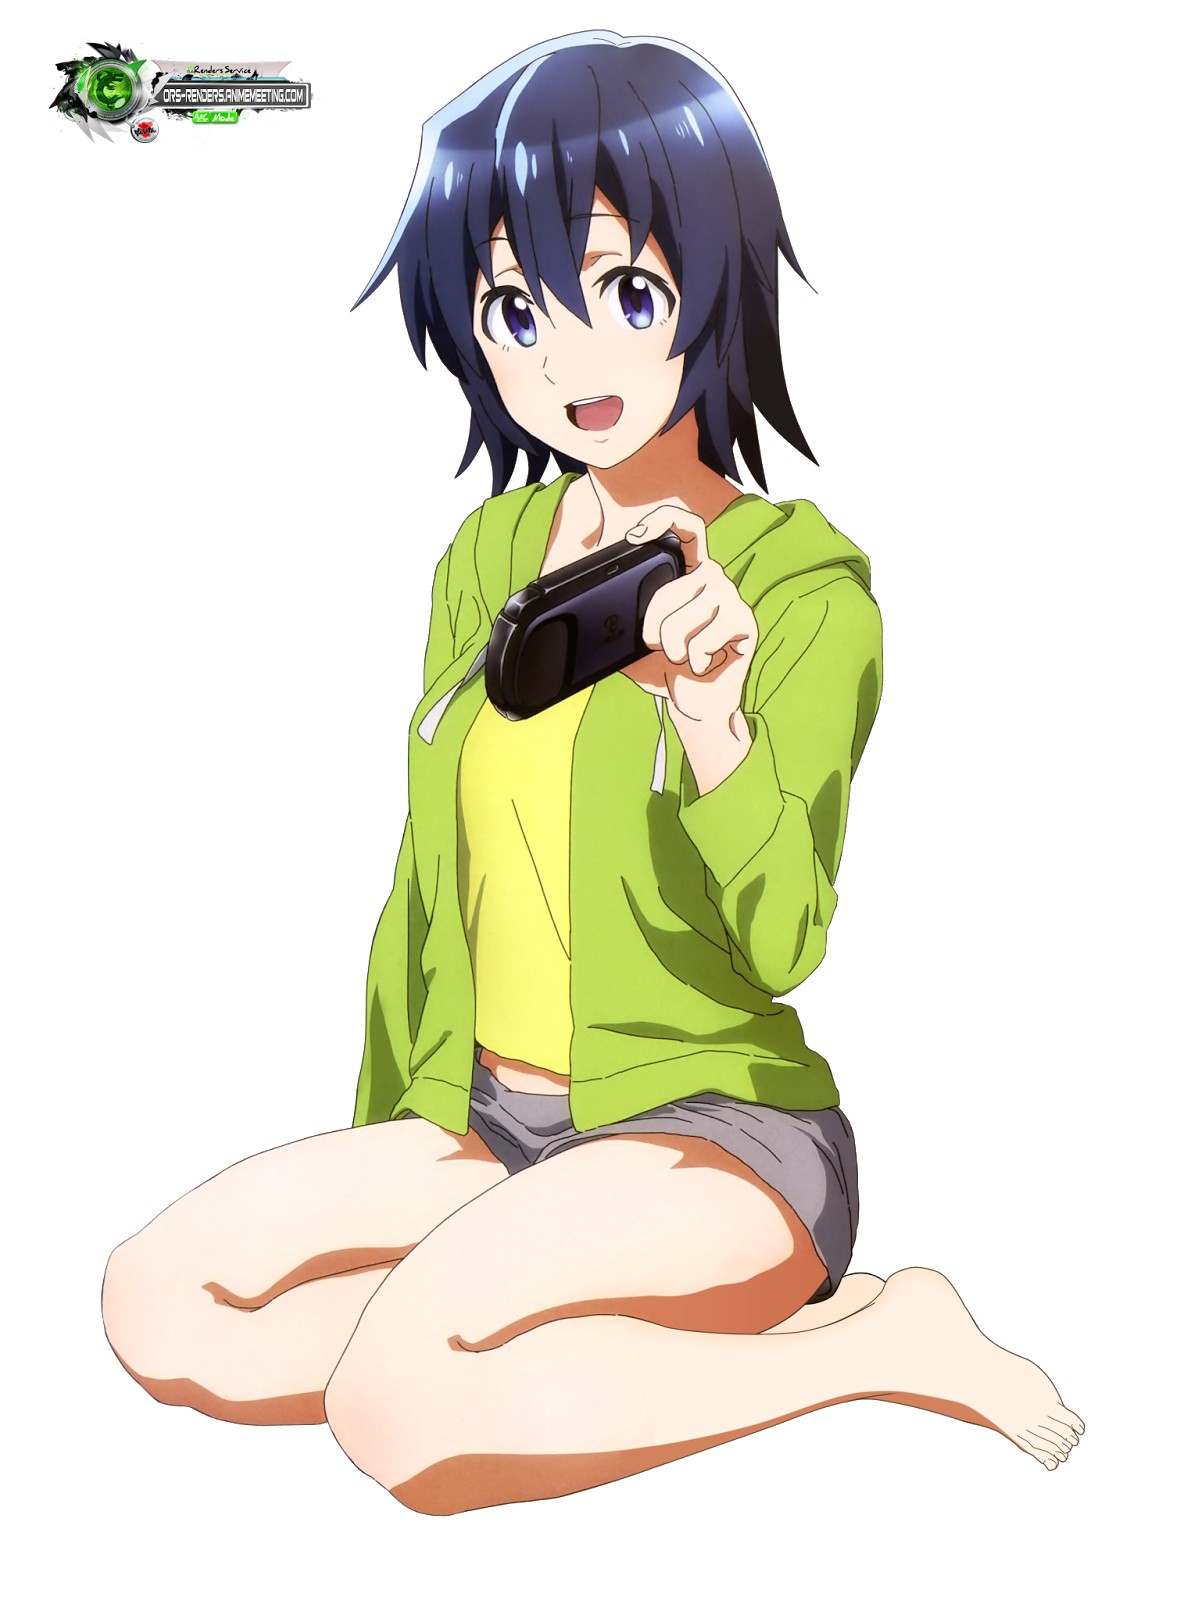 ORS Anime Renders: Gamers!:Hoshinomori Chiaki Mega Cute Playing HD Render.